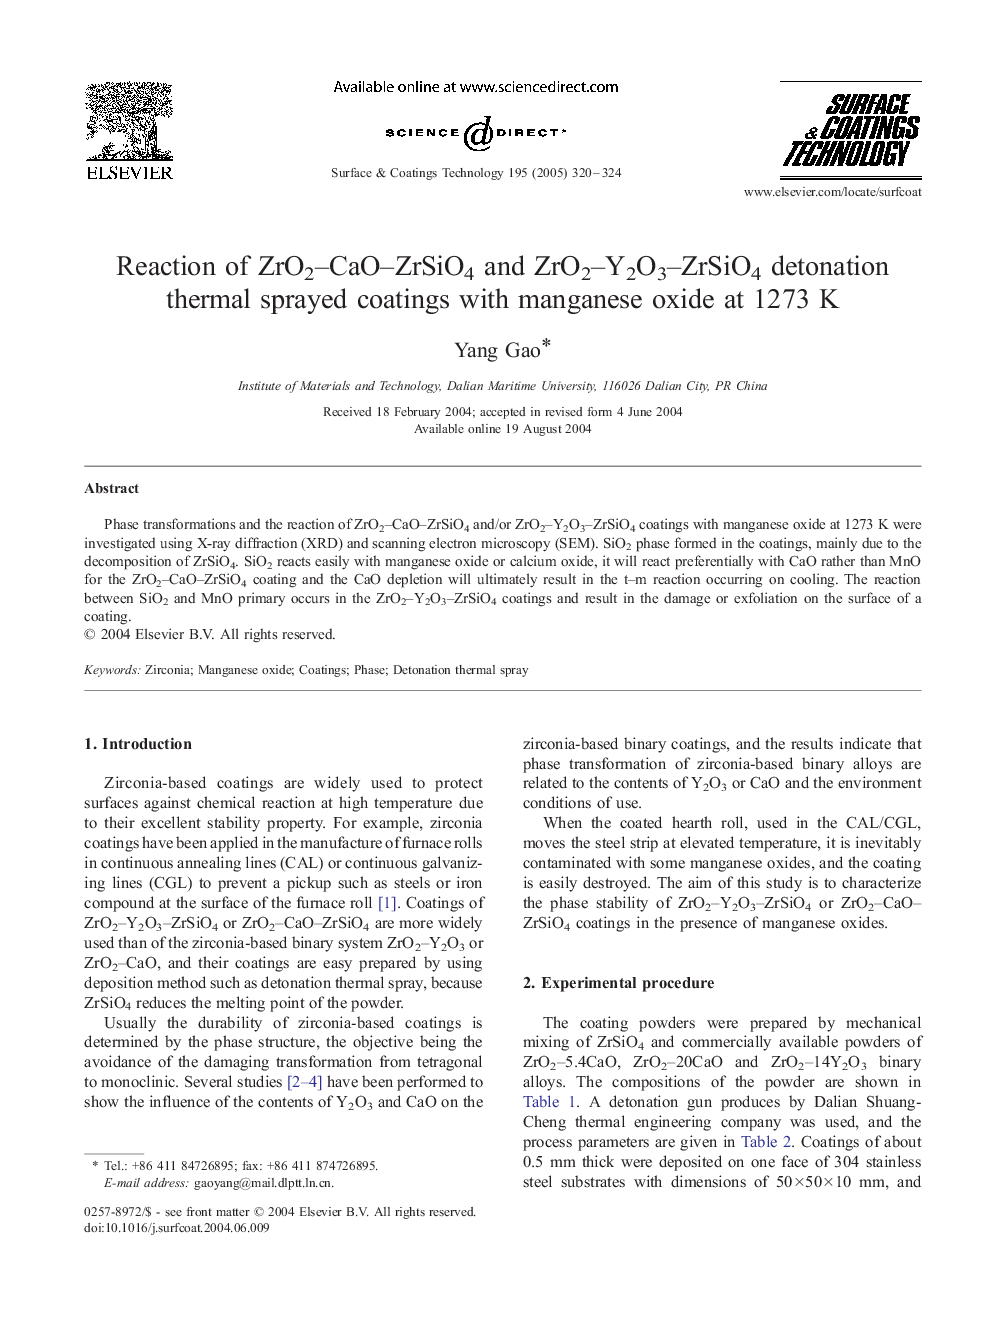 Reaction of ZrO2-CaO-ZrSiO4 and ZrO2-Y2O3-ZrSiO4 detonation thermal sprayed coatings with manganese oxide at 1273 K